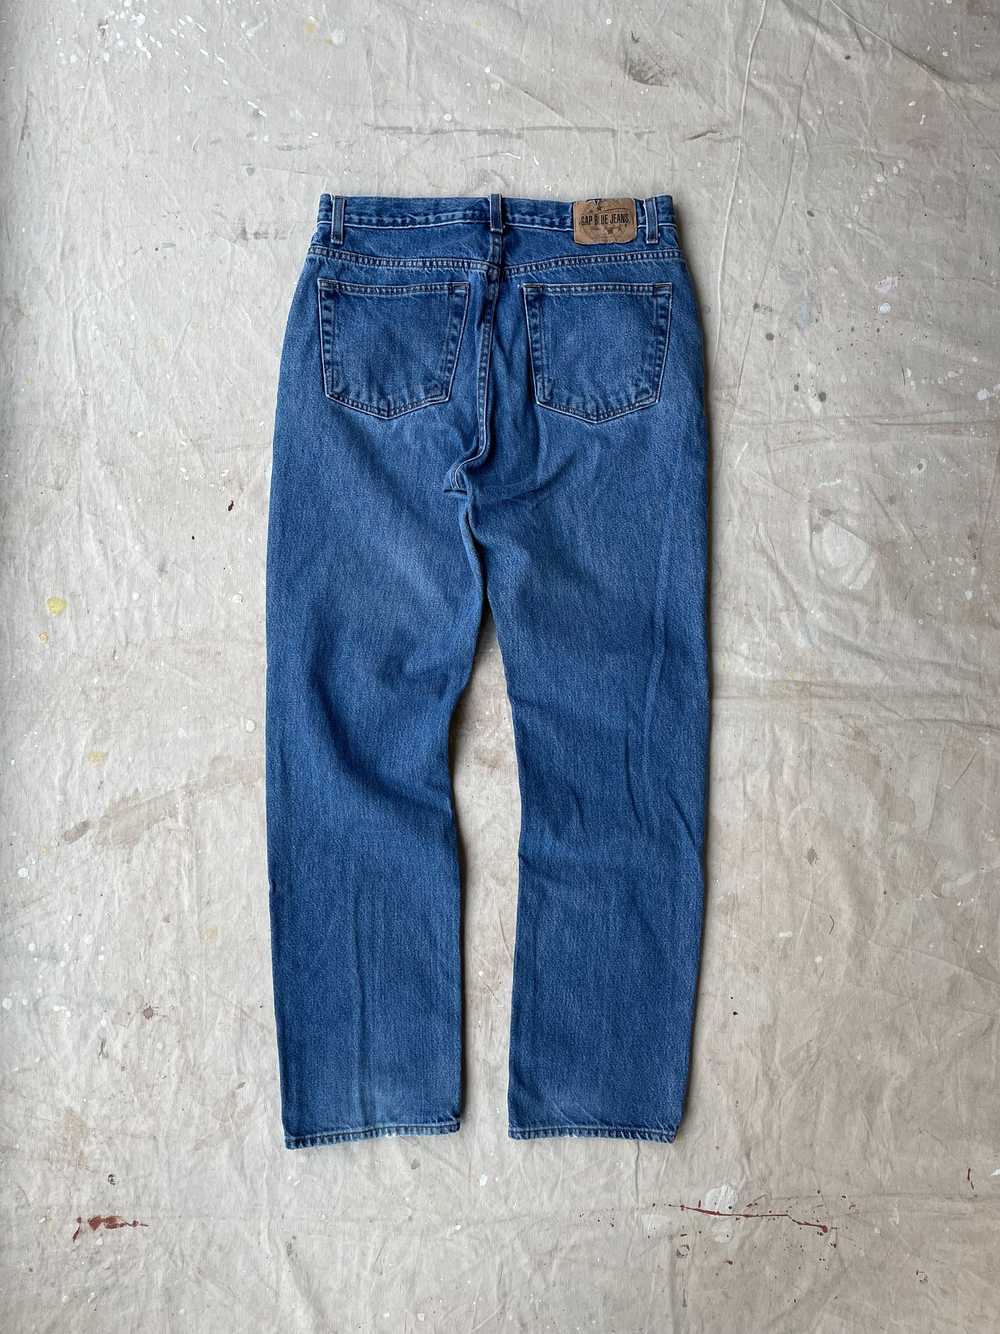 GAP Medium Wash Blue Jeans—[32x33] - image 2